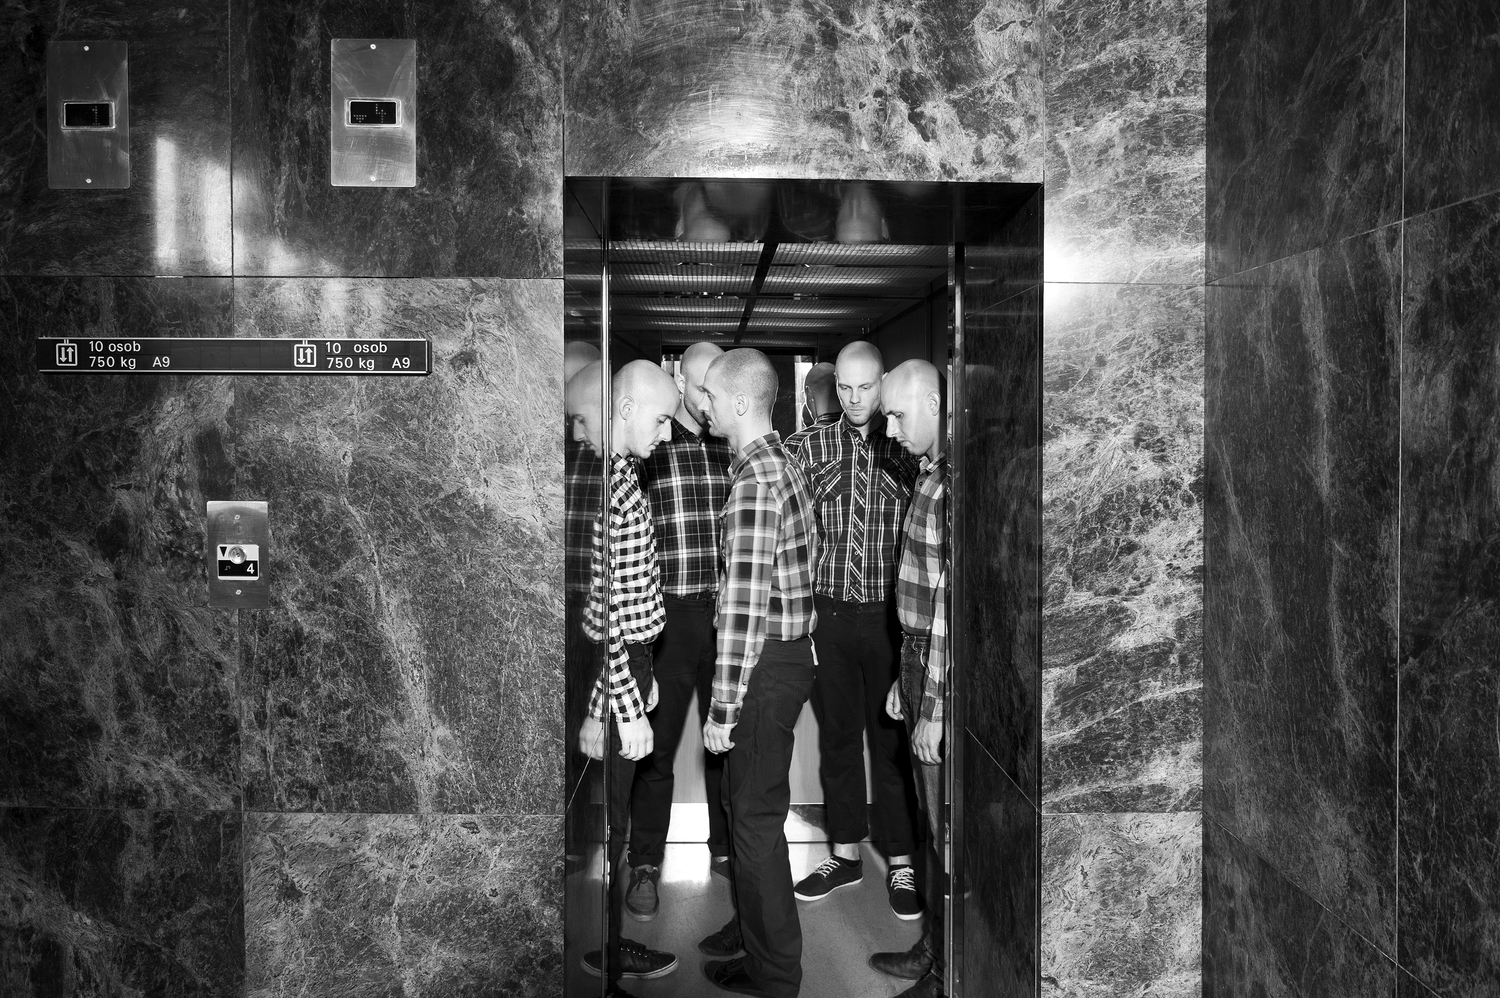 12 dostalkova the process of measuring elevator groupthink